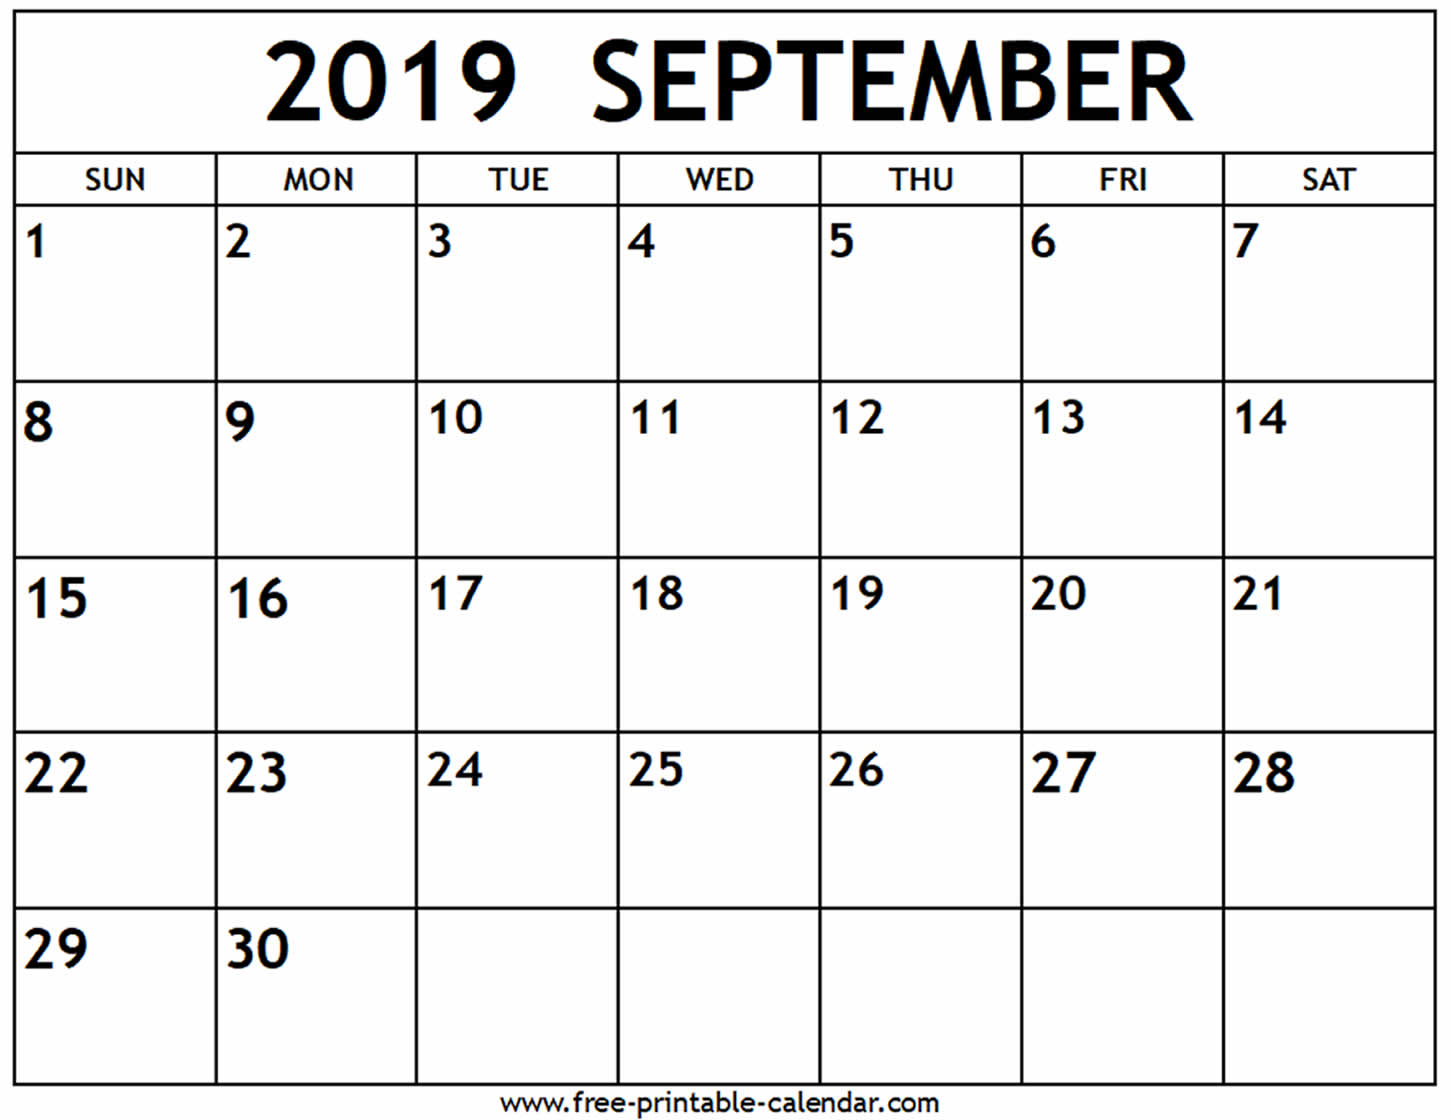 September 2019 Calendar - Free-Printable-Calendar